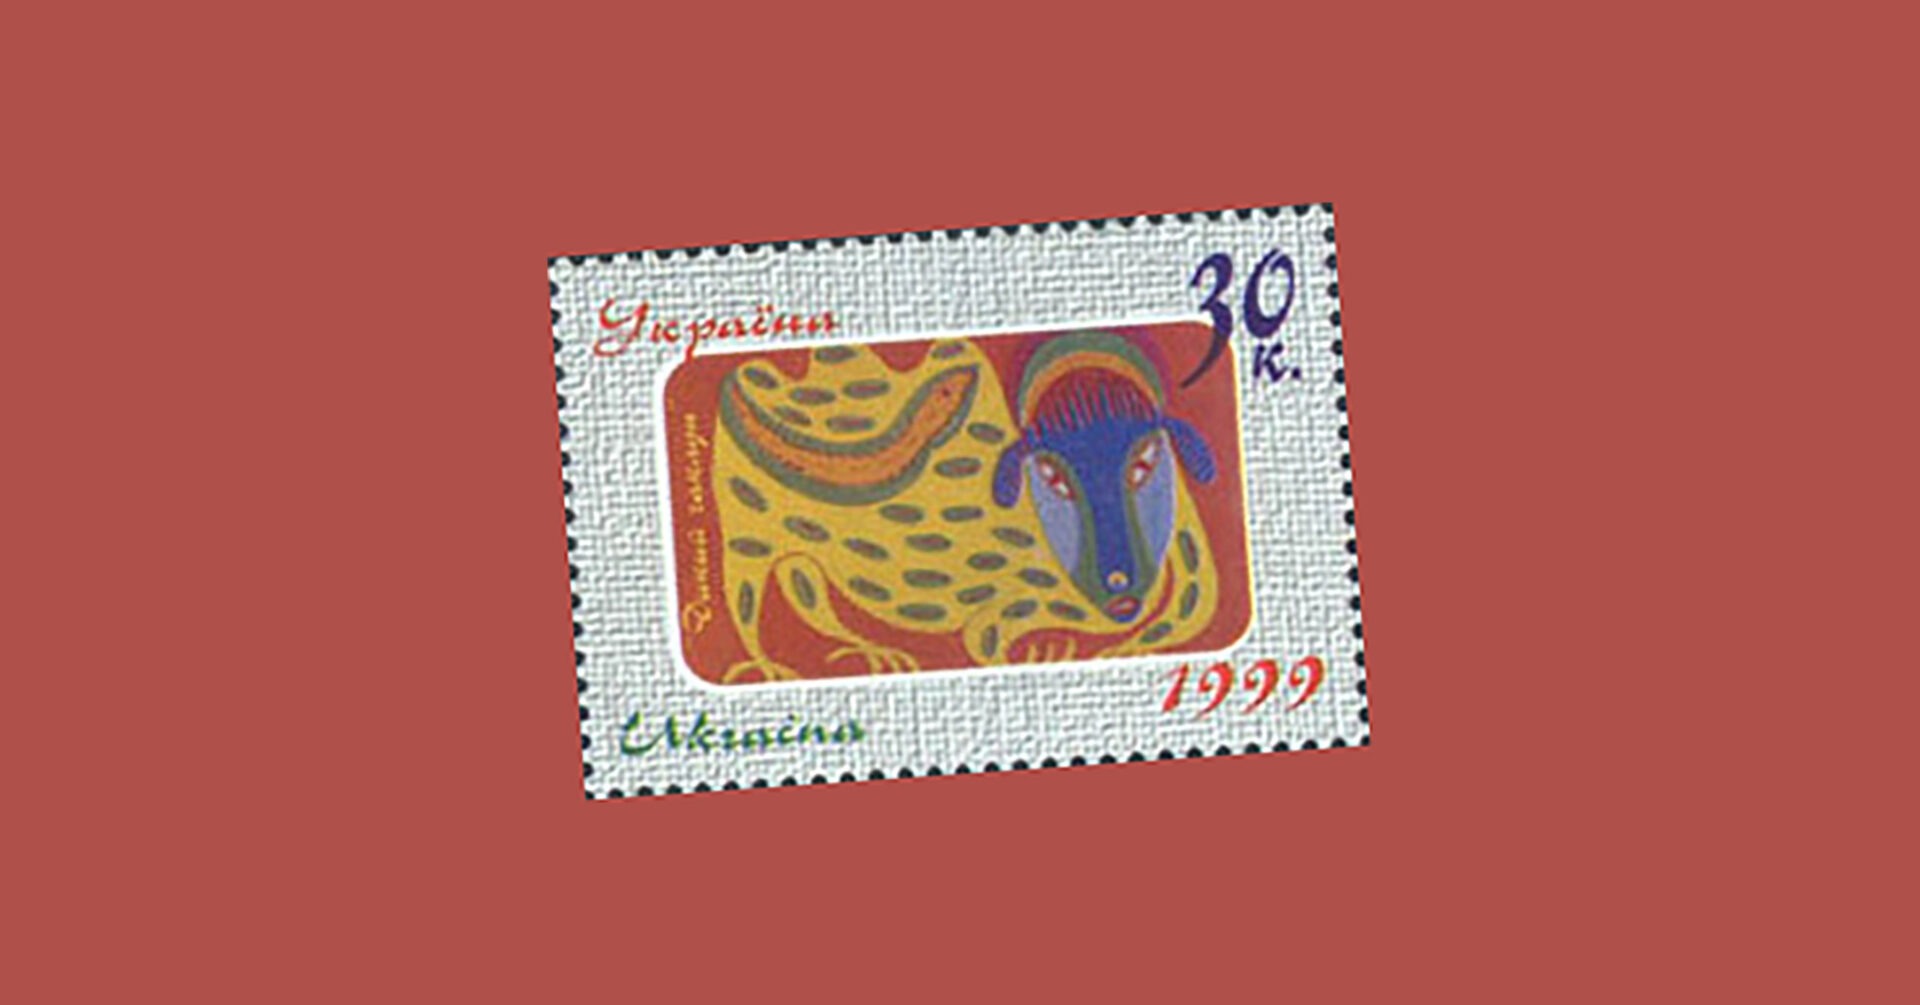 Ukrainskt frimärke tillägnat Marija Prymatjenko.